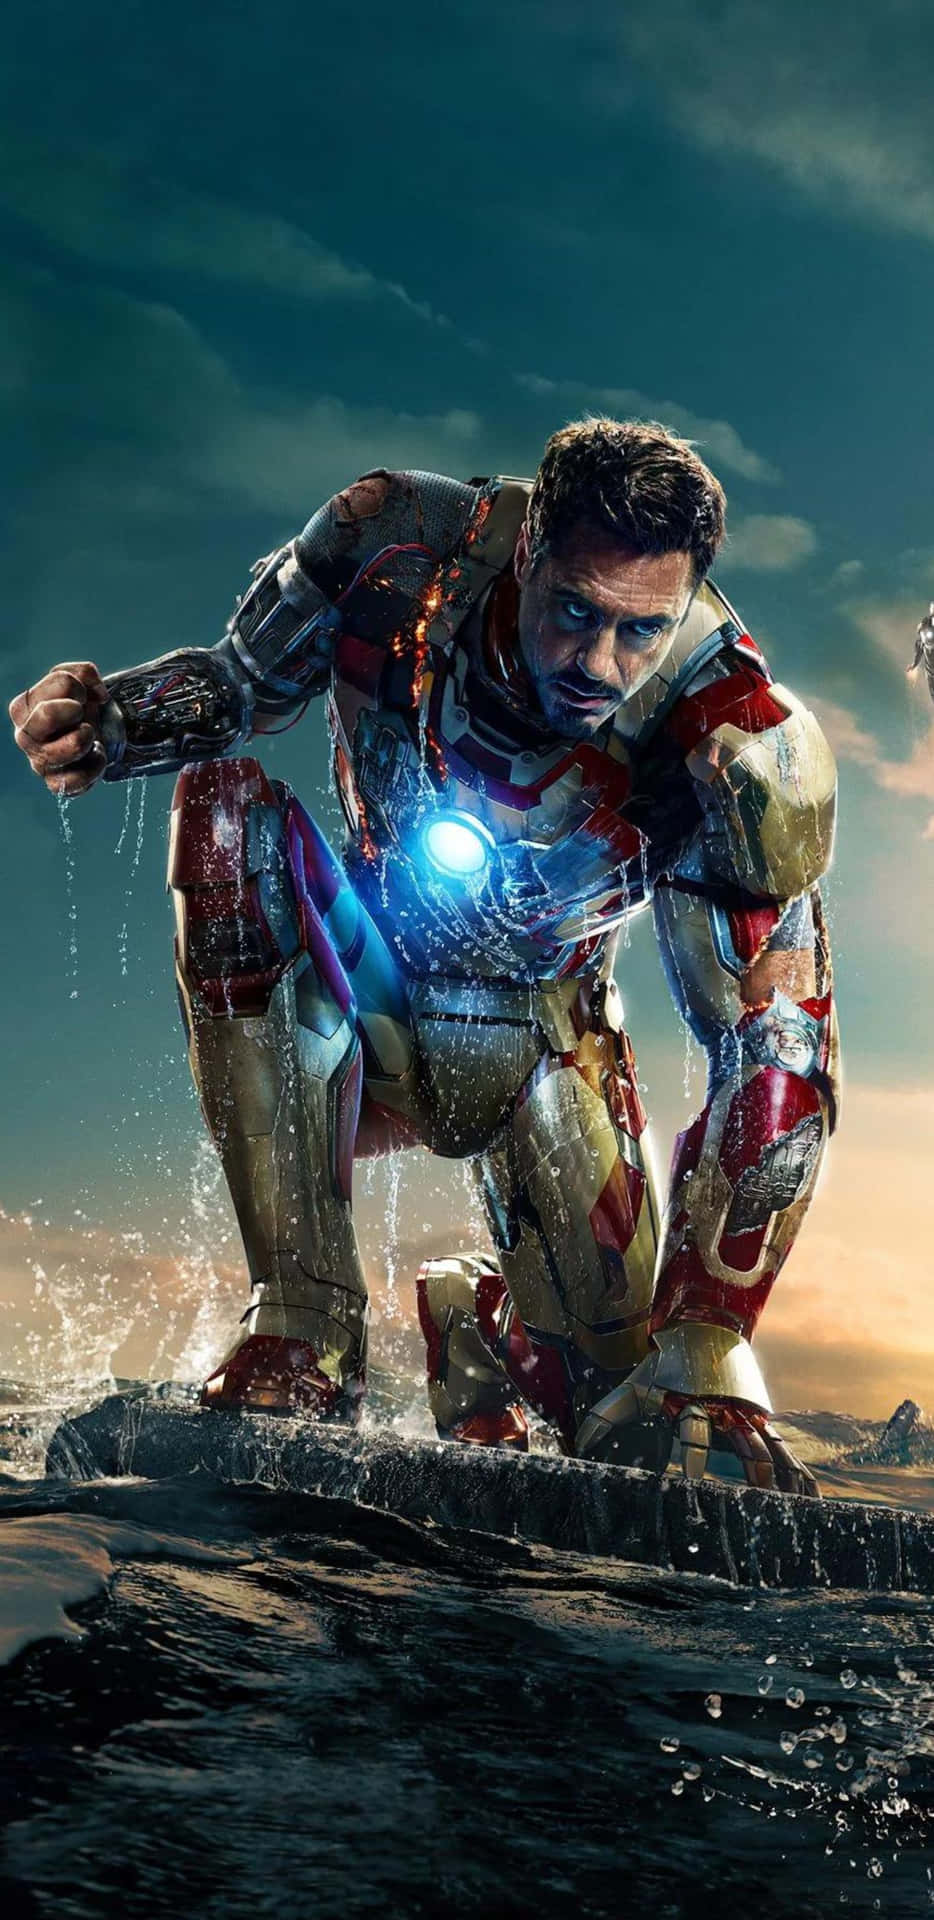 Fondode Pantalla De Pixel 3xl De Iron Man Con El Traje Destruido.